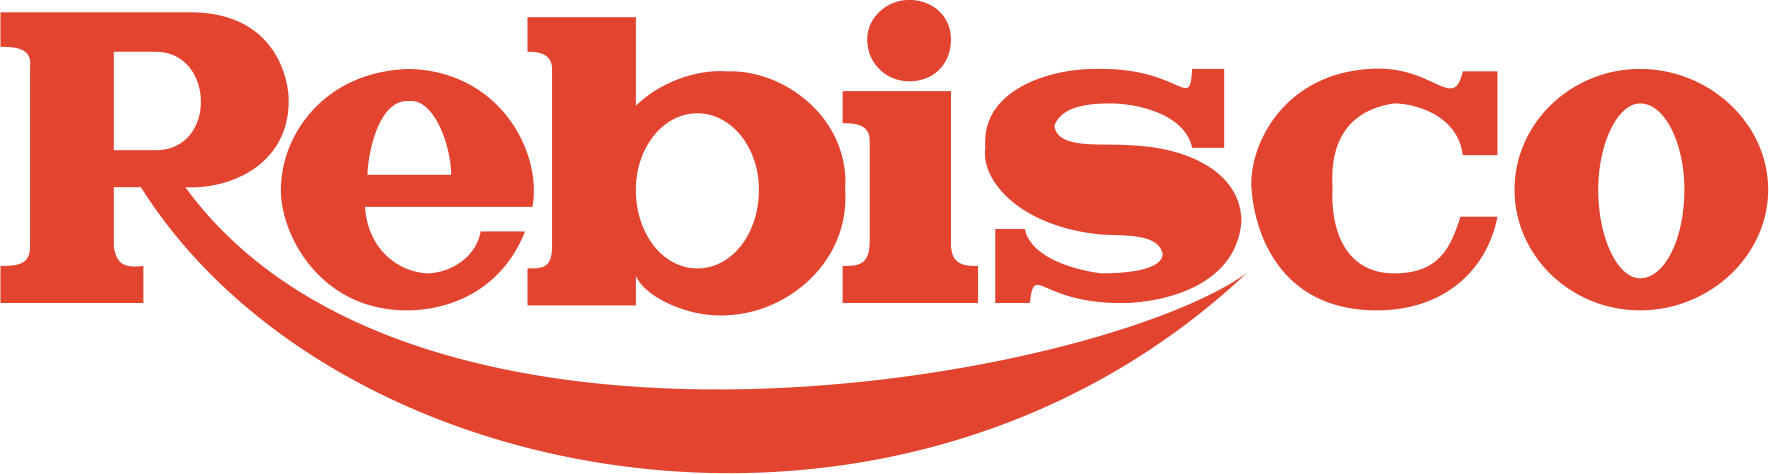 Rebisco Logo